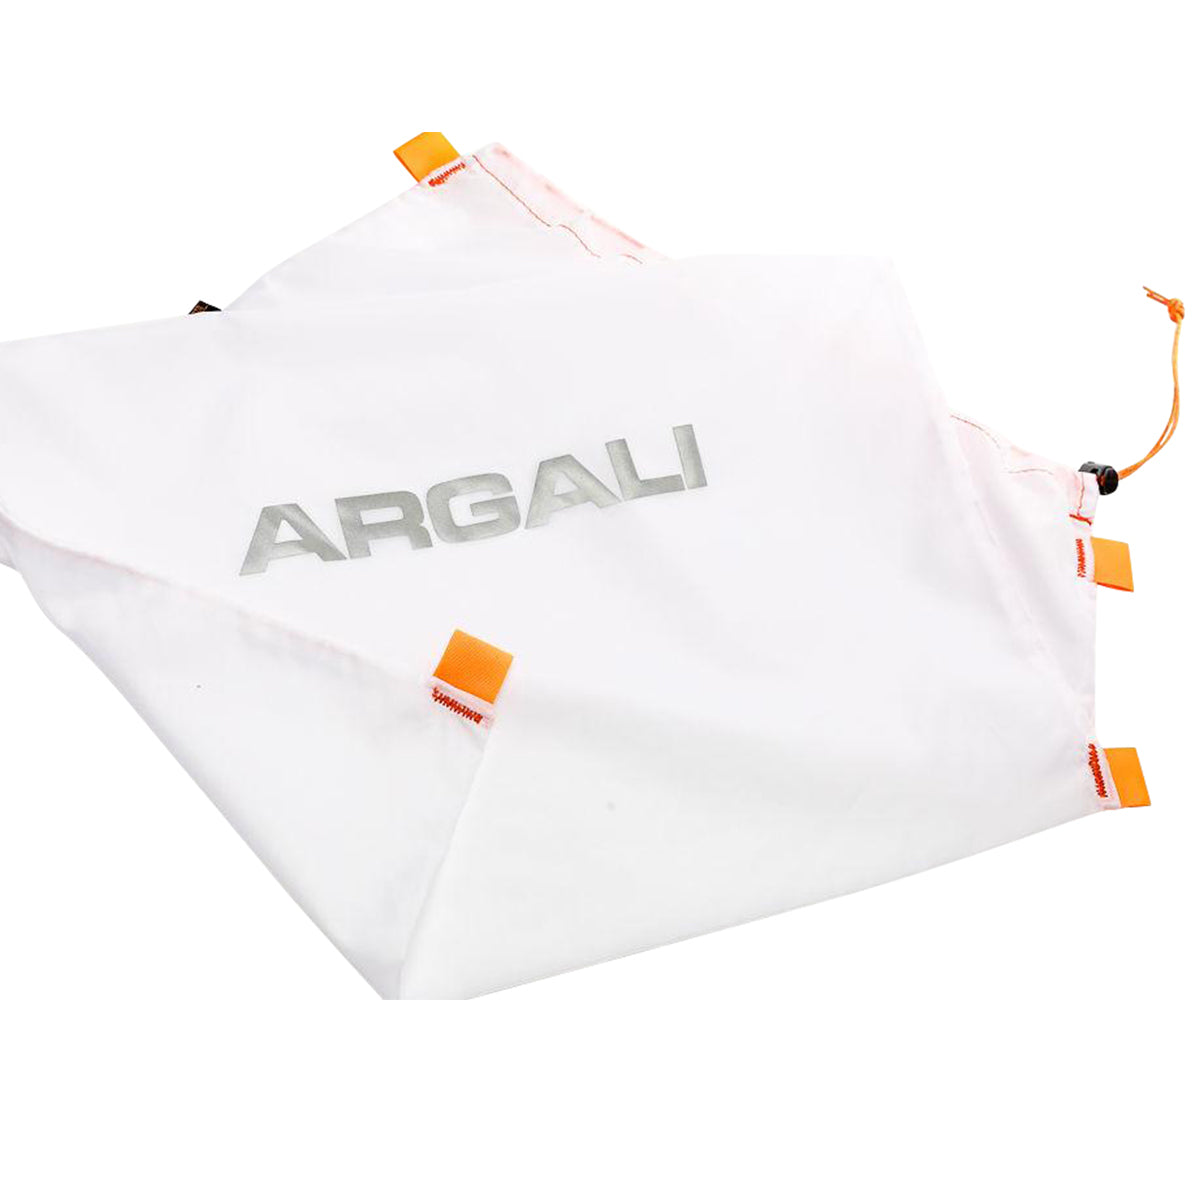 Argali High Country Pack Ultralight Game Bag Set in Argali High Country Pack Ultralight Game Bag Set by Argali | Gear - goHUNT Shop by GOHUNT | Argali - GOHUNT Shop